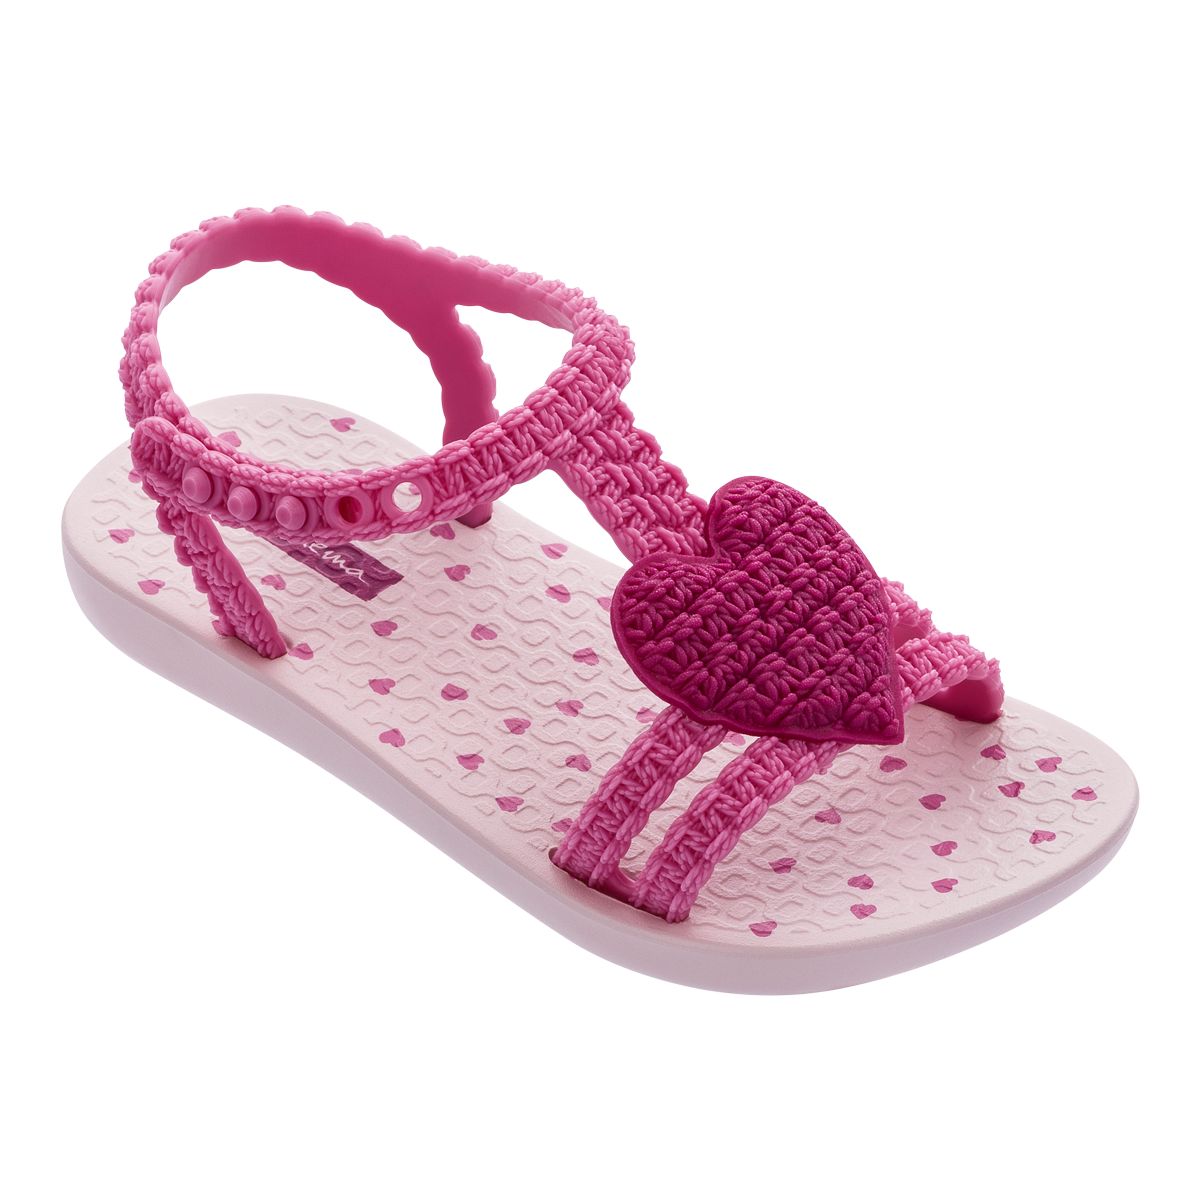 Ipanema Kids' My First Slide Sandals